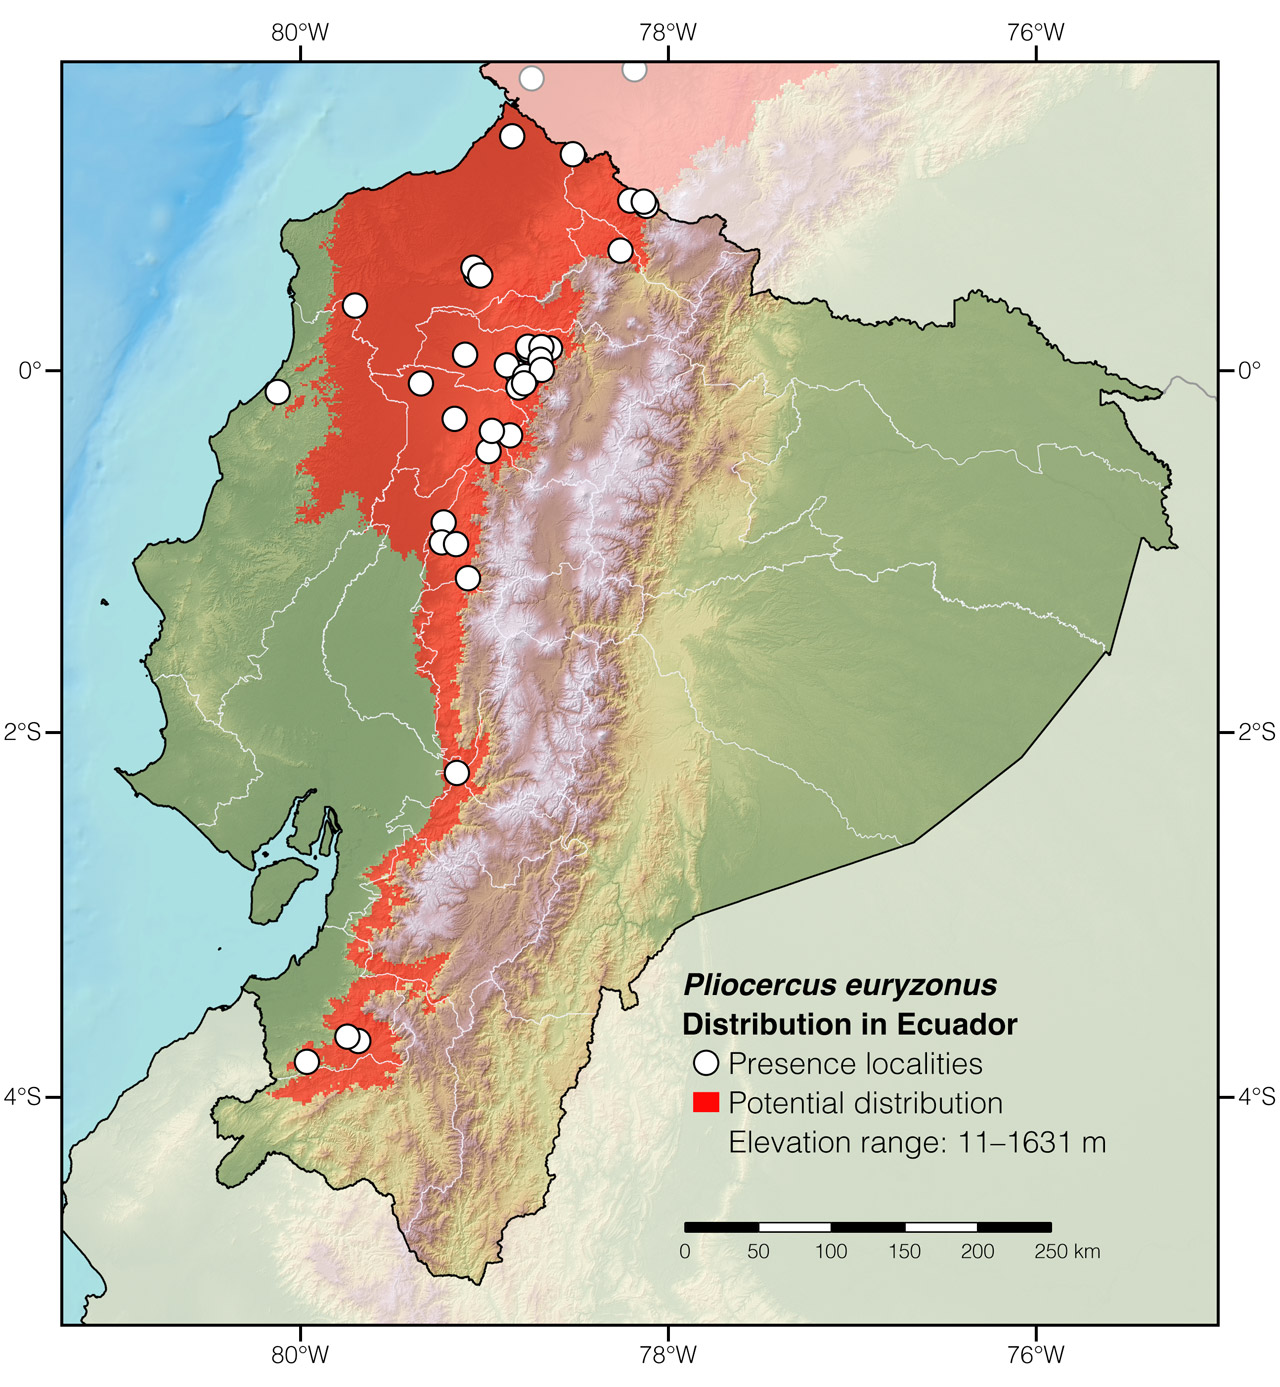 Distribution of Pliocercus euryzonus in Ecuador